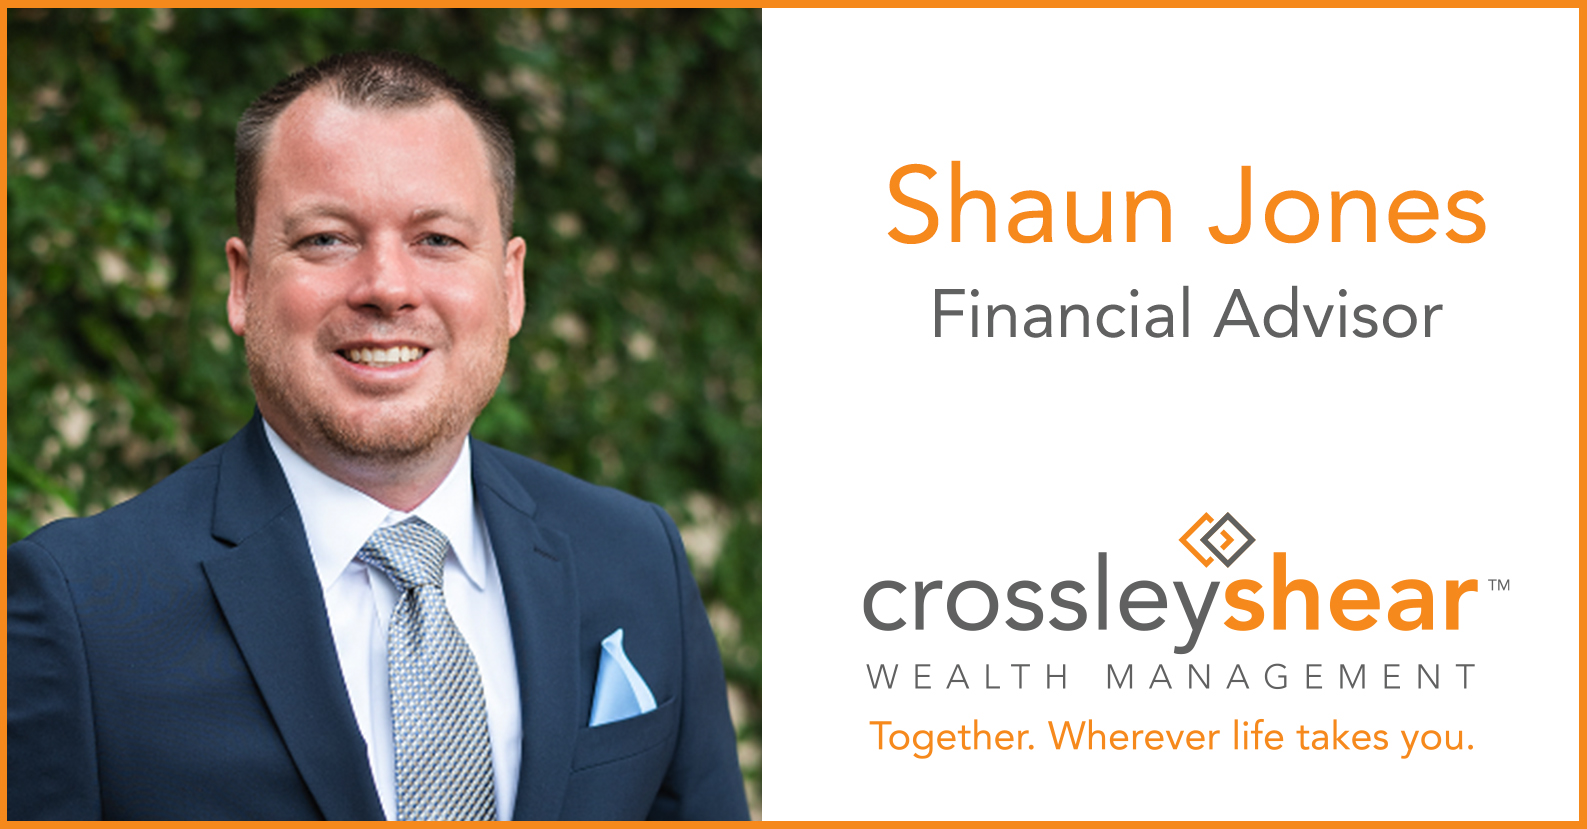 CrossleyShear Wealth Management’s Shaun Jones Promoted to Financial Advisor